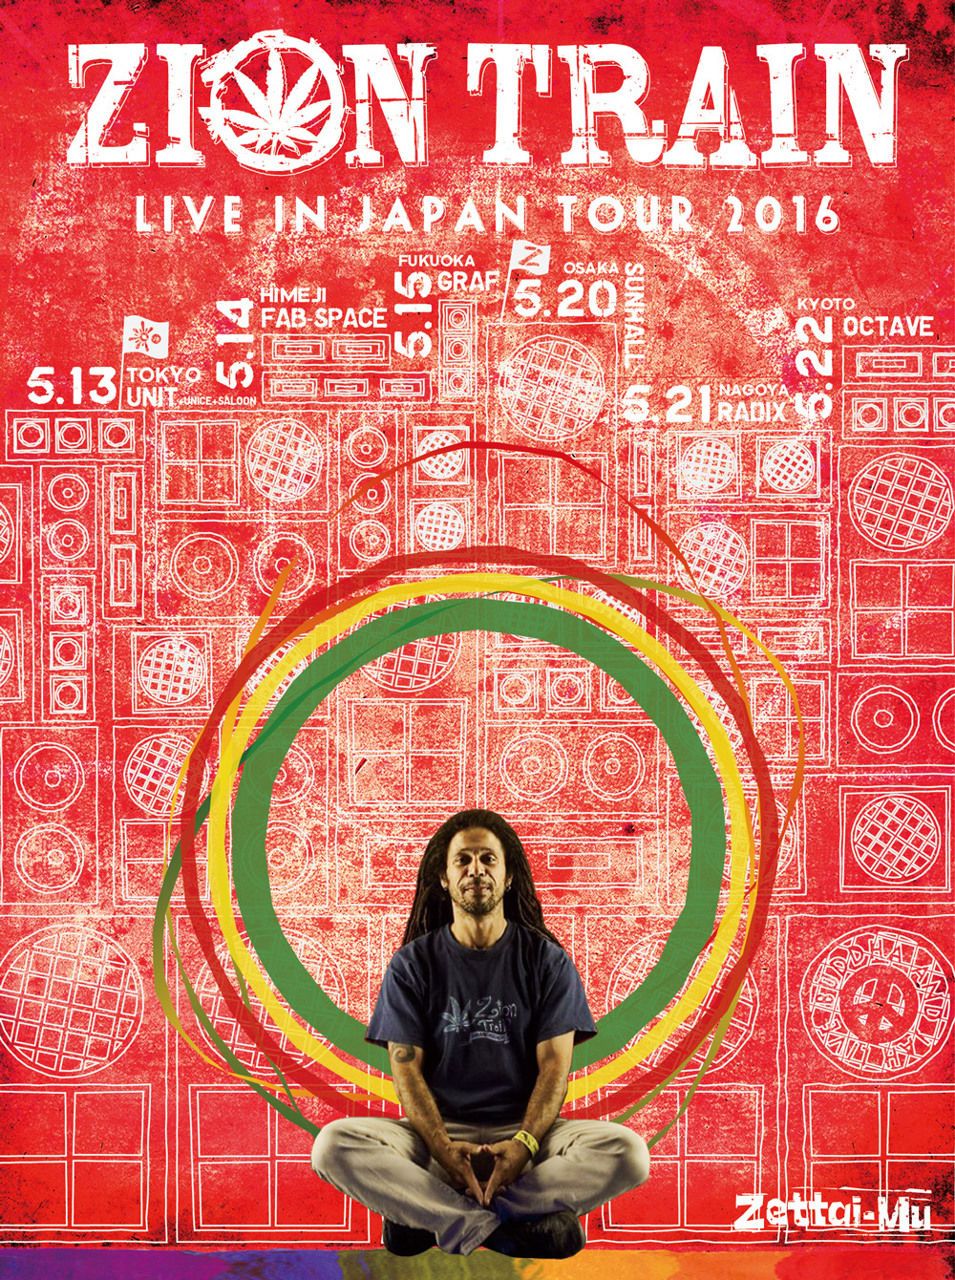 ZETTAI-MU “ ZION TRAIN LIVE IN JAPAN TOUR 2016 ”